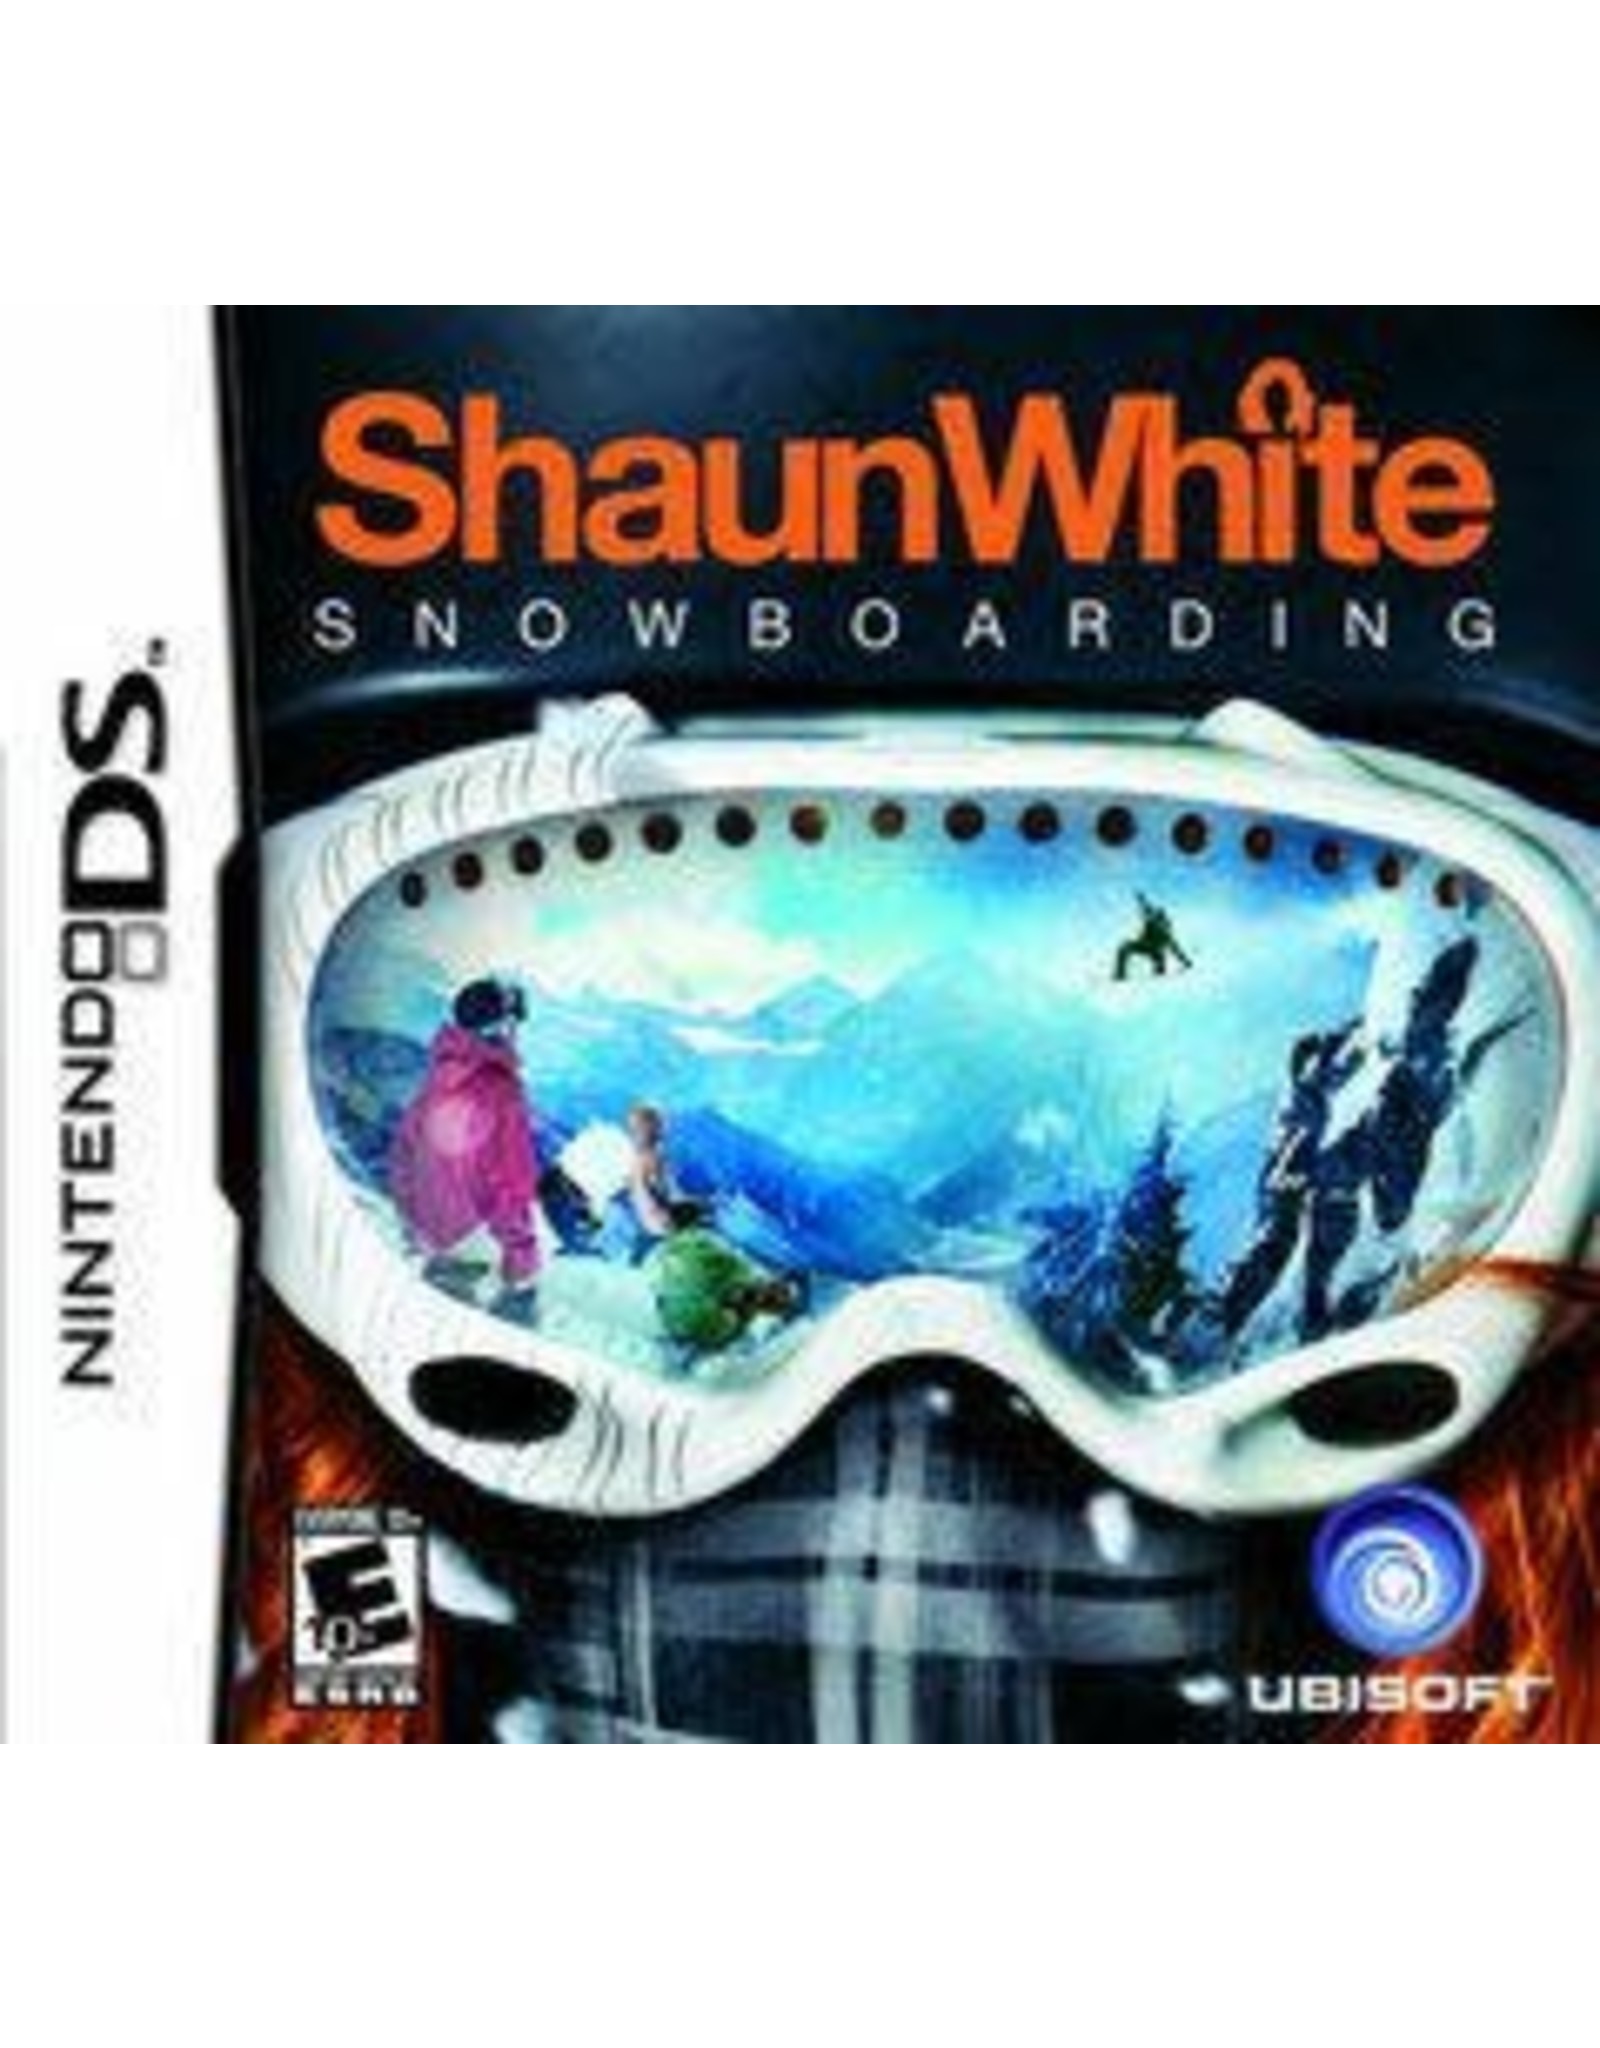 Nintendo DS Shaun White Snowboarding (CiB)